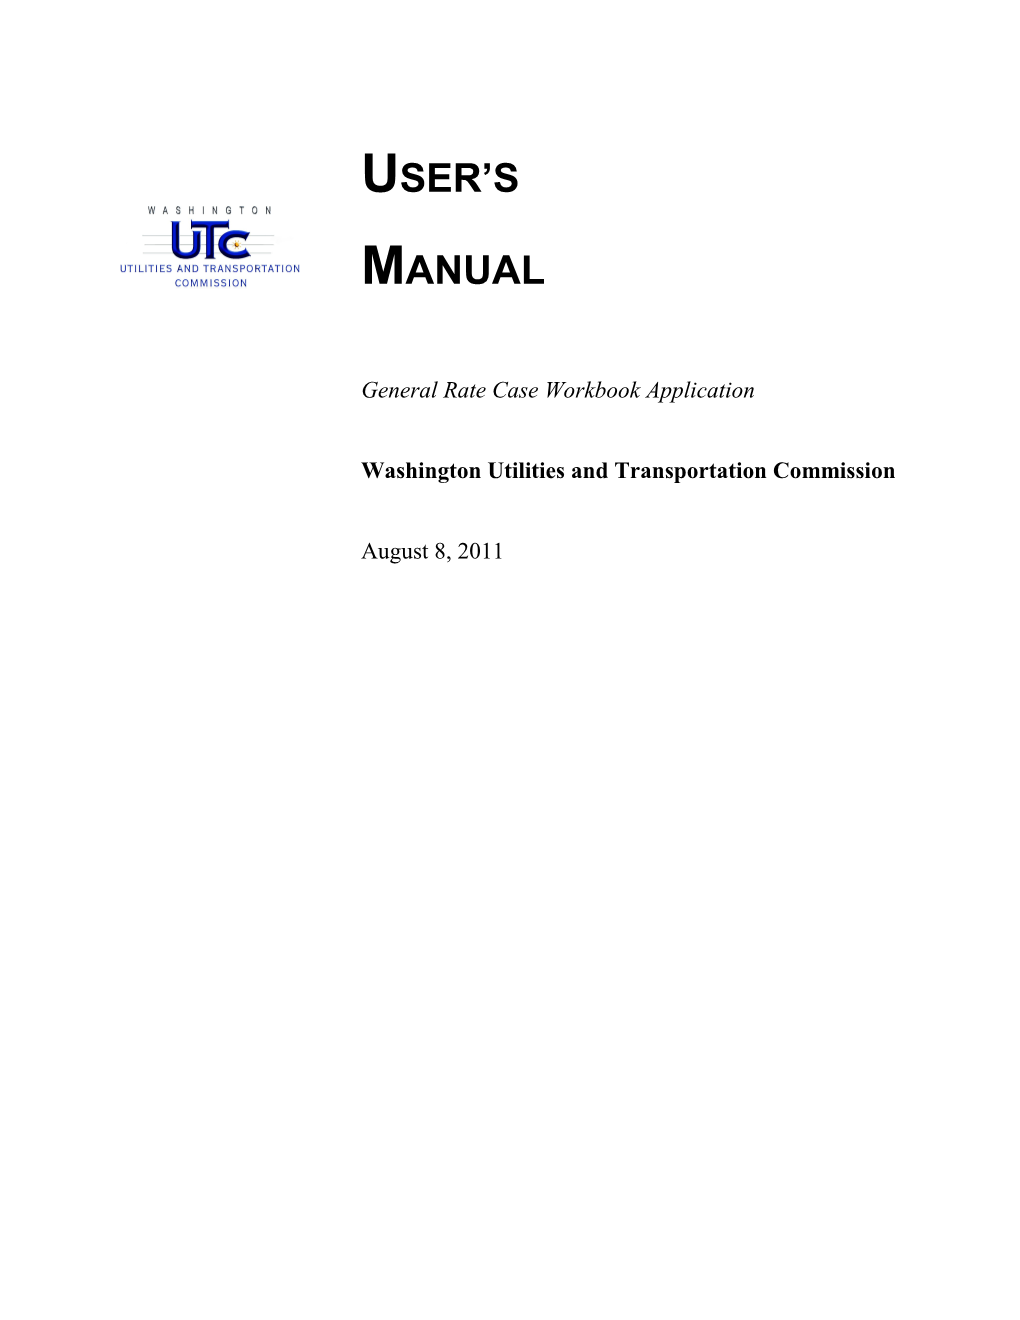 GRCW User's Manual